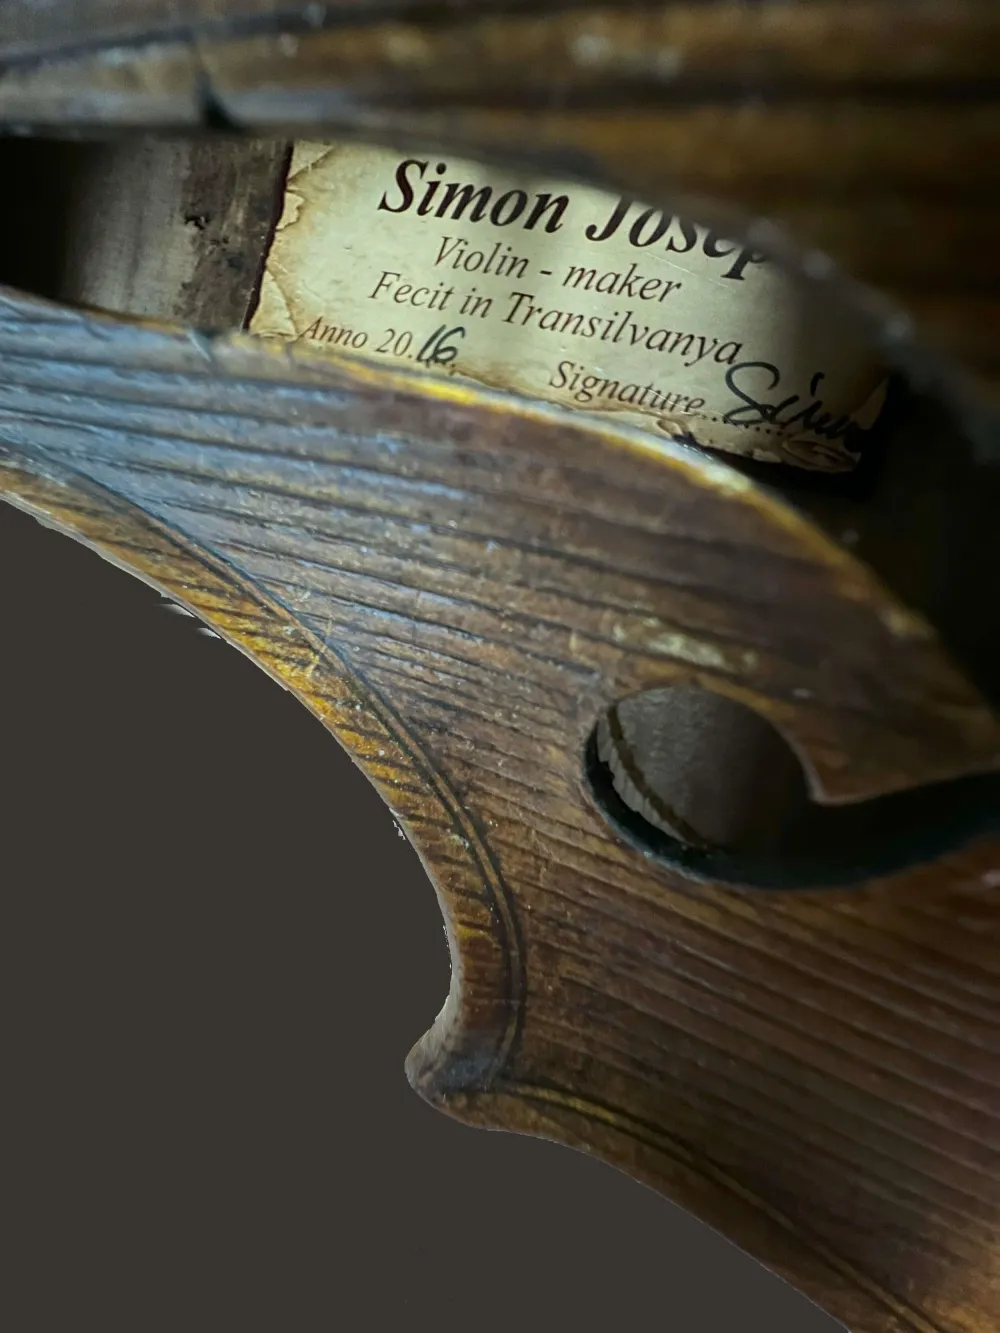 Etikette-Detailansicht einer Simon Joseph Meister Geige (Violine) Stradivarius Modell Handarbeit 2016